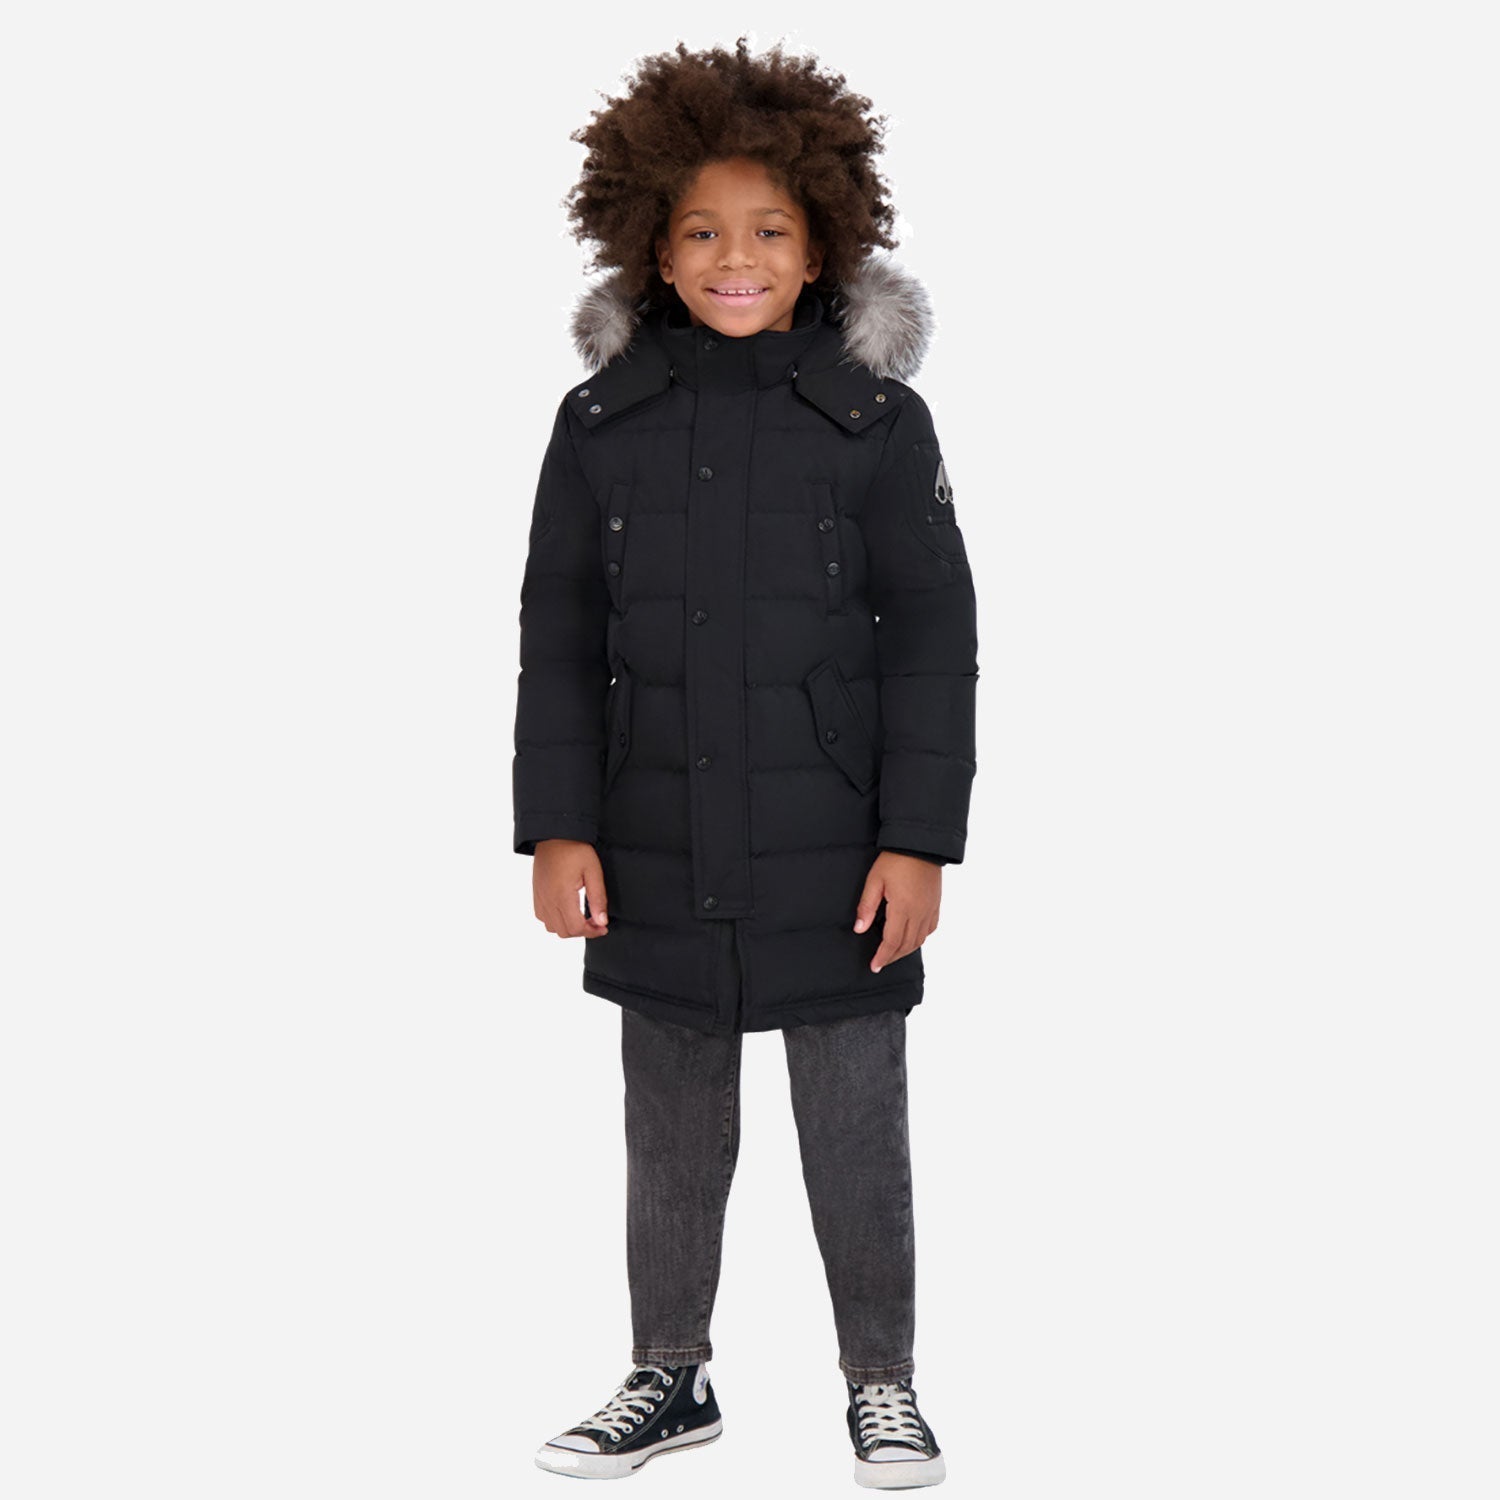 Moose Knuckles Kid's Parka Jacket - Color: BLACK/FROST FOX FUR - Kids Premium Clothing -